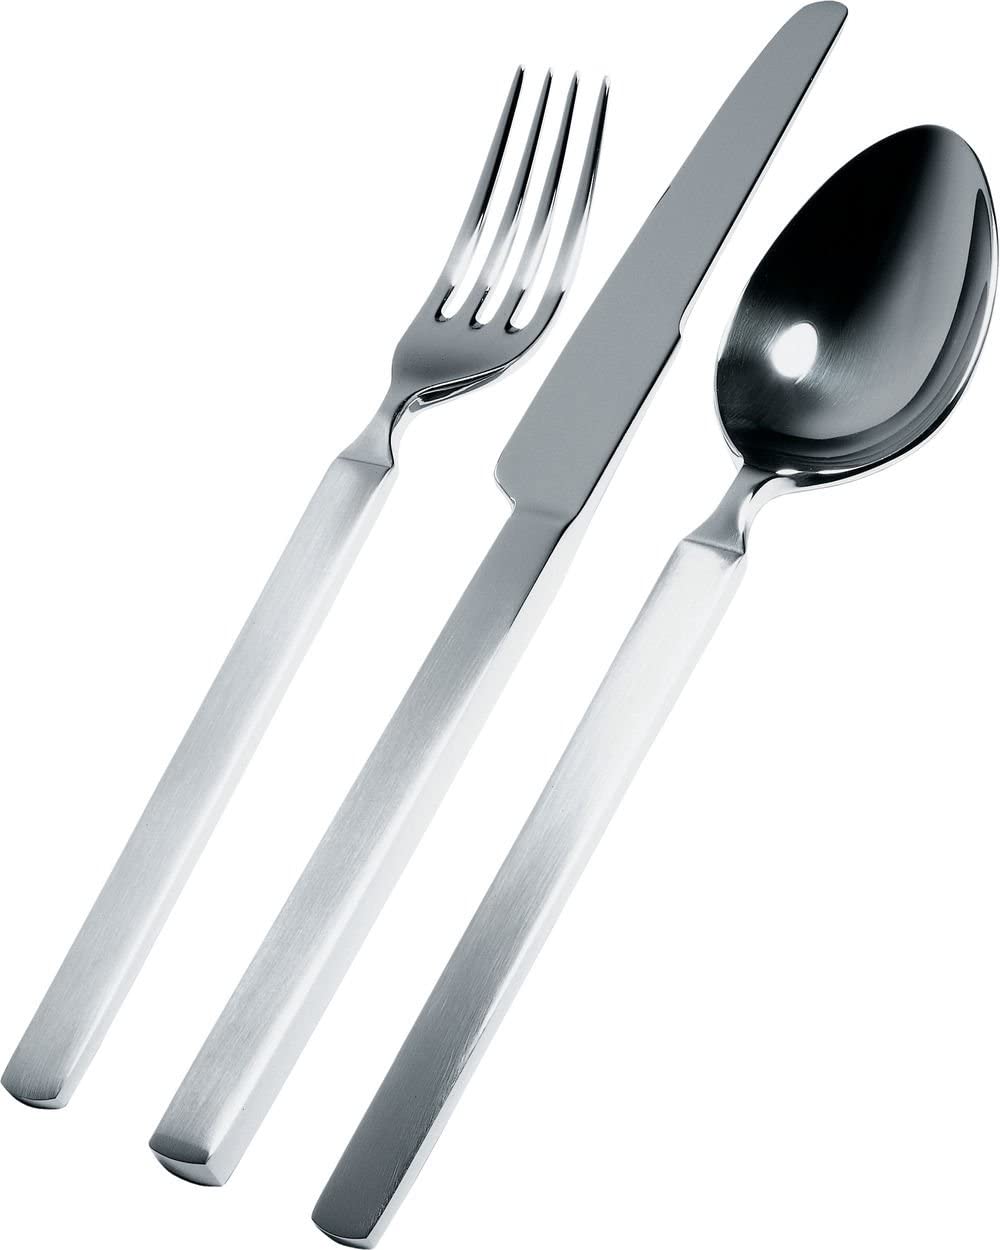 Alessi "Dry" 5-Piece Cutlery Set